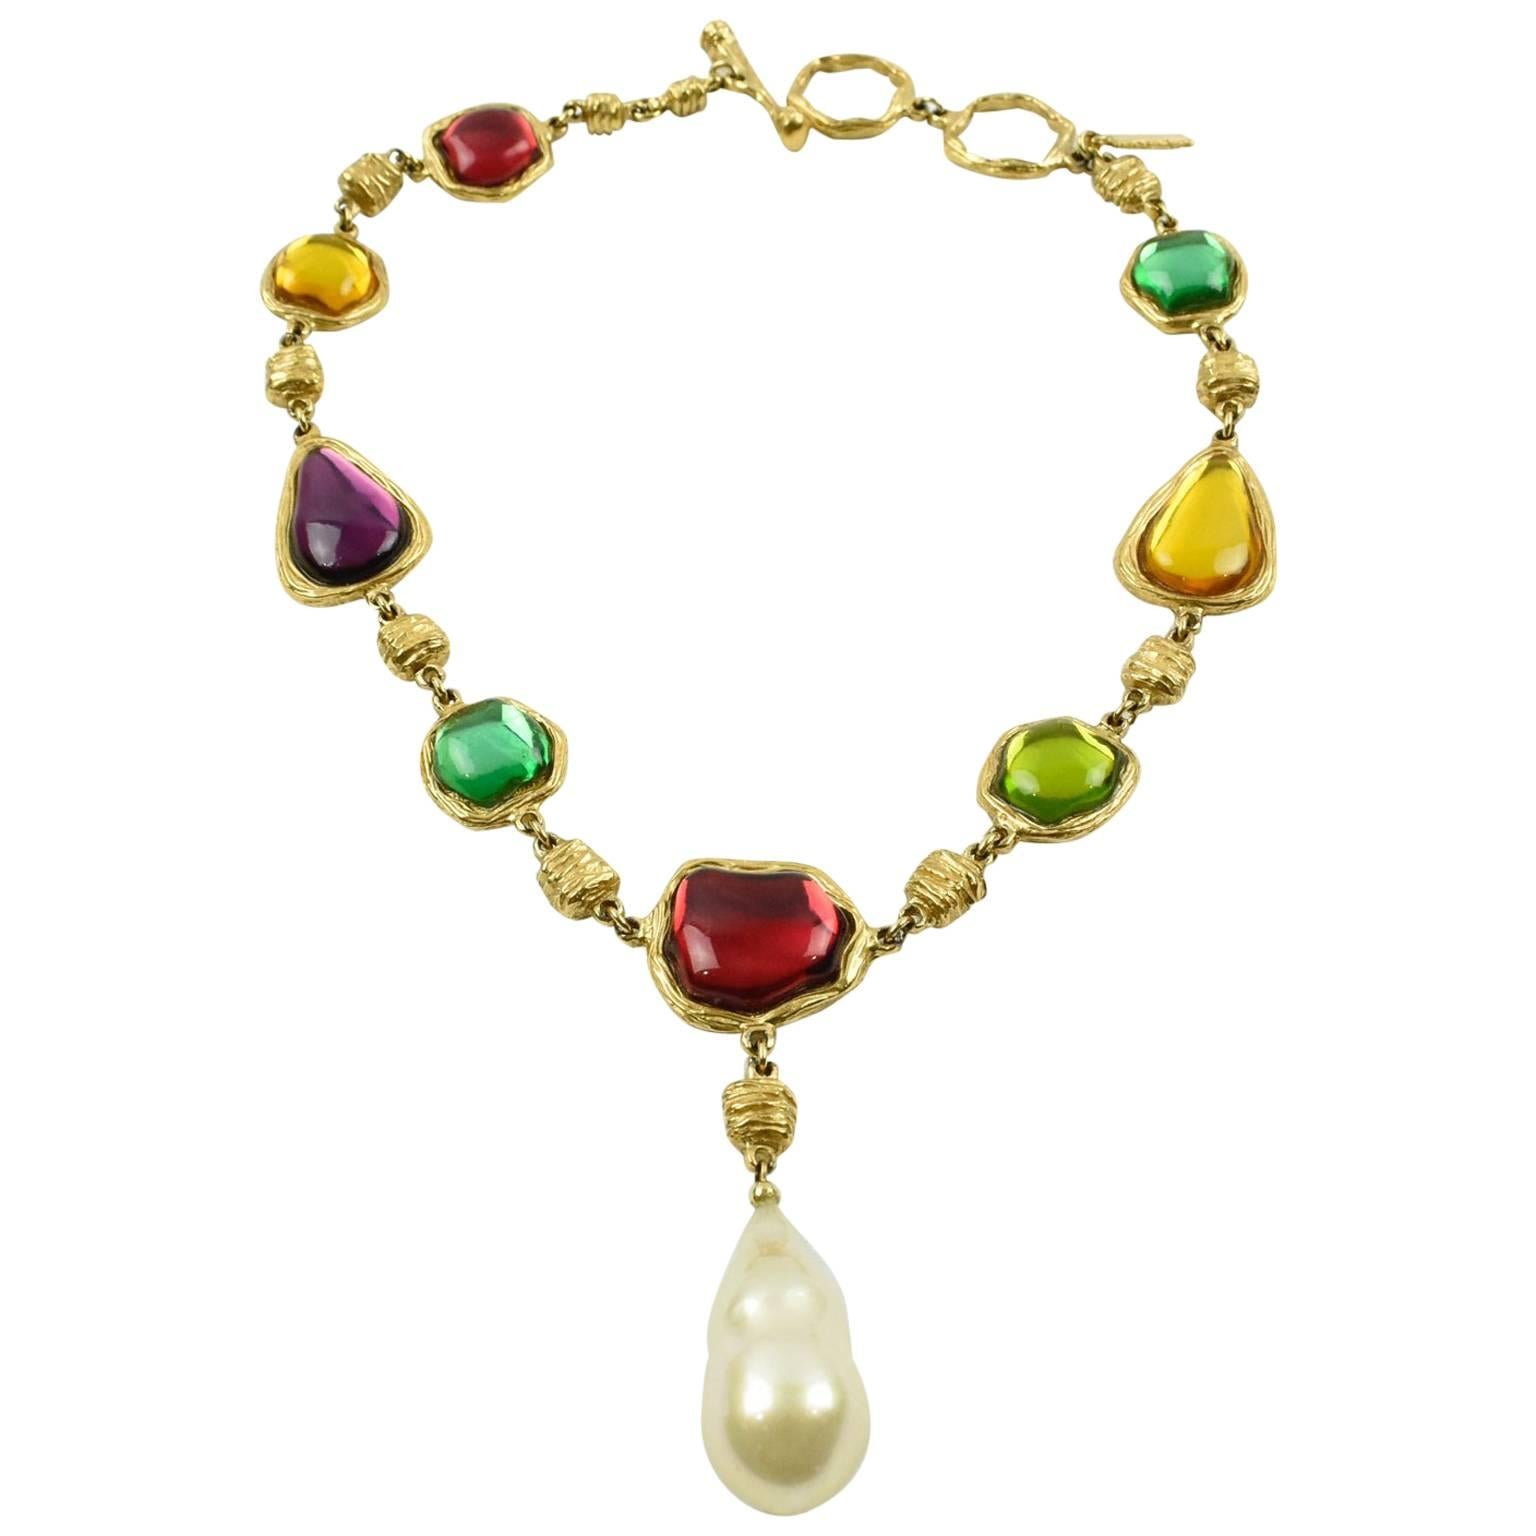 Charles Jourdan Paris Rare Gilt Metal Jeweled Necklace Multicolor Rhinestones